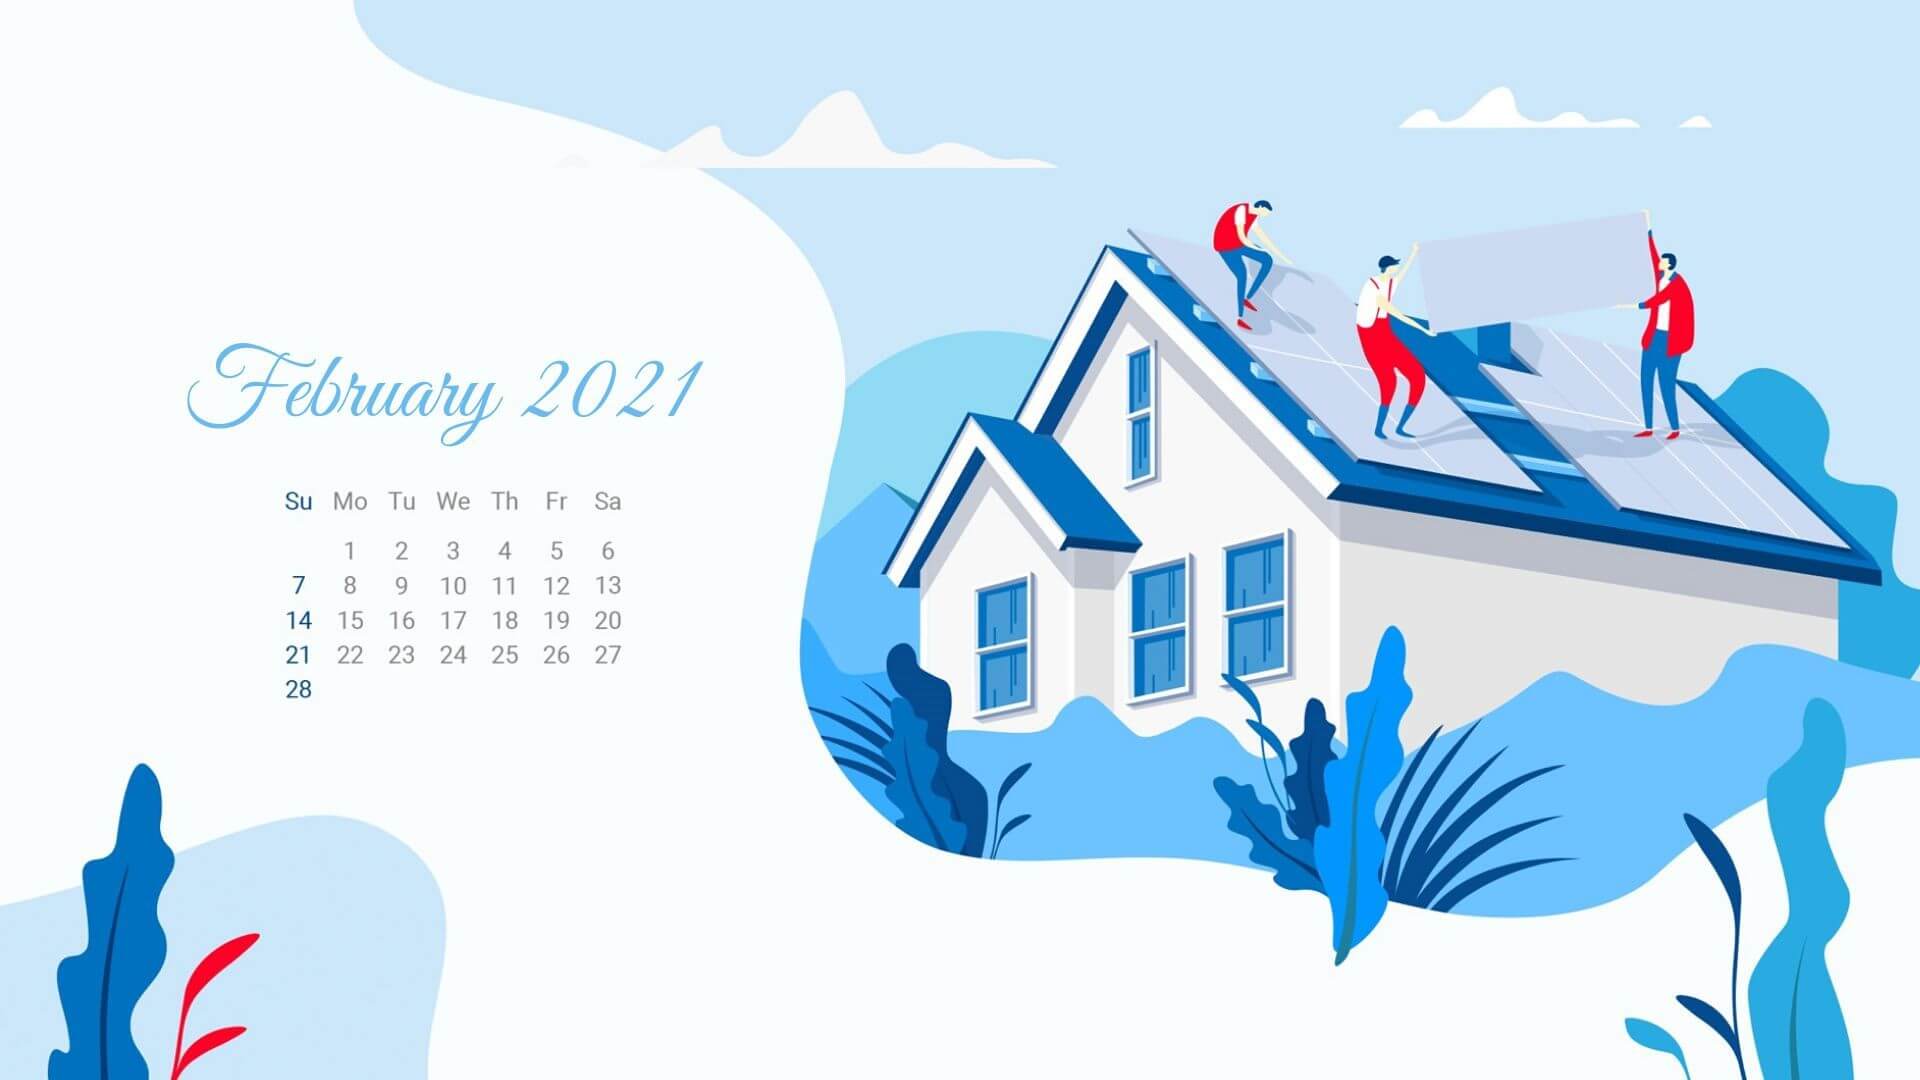 February Calendar Wallpaper 2021 3